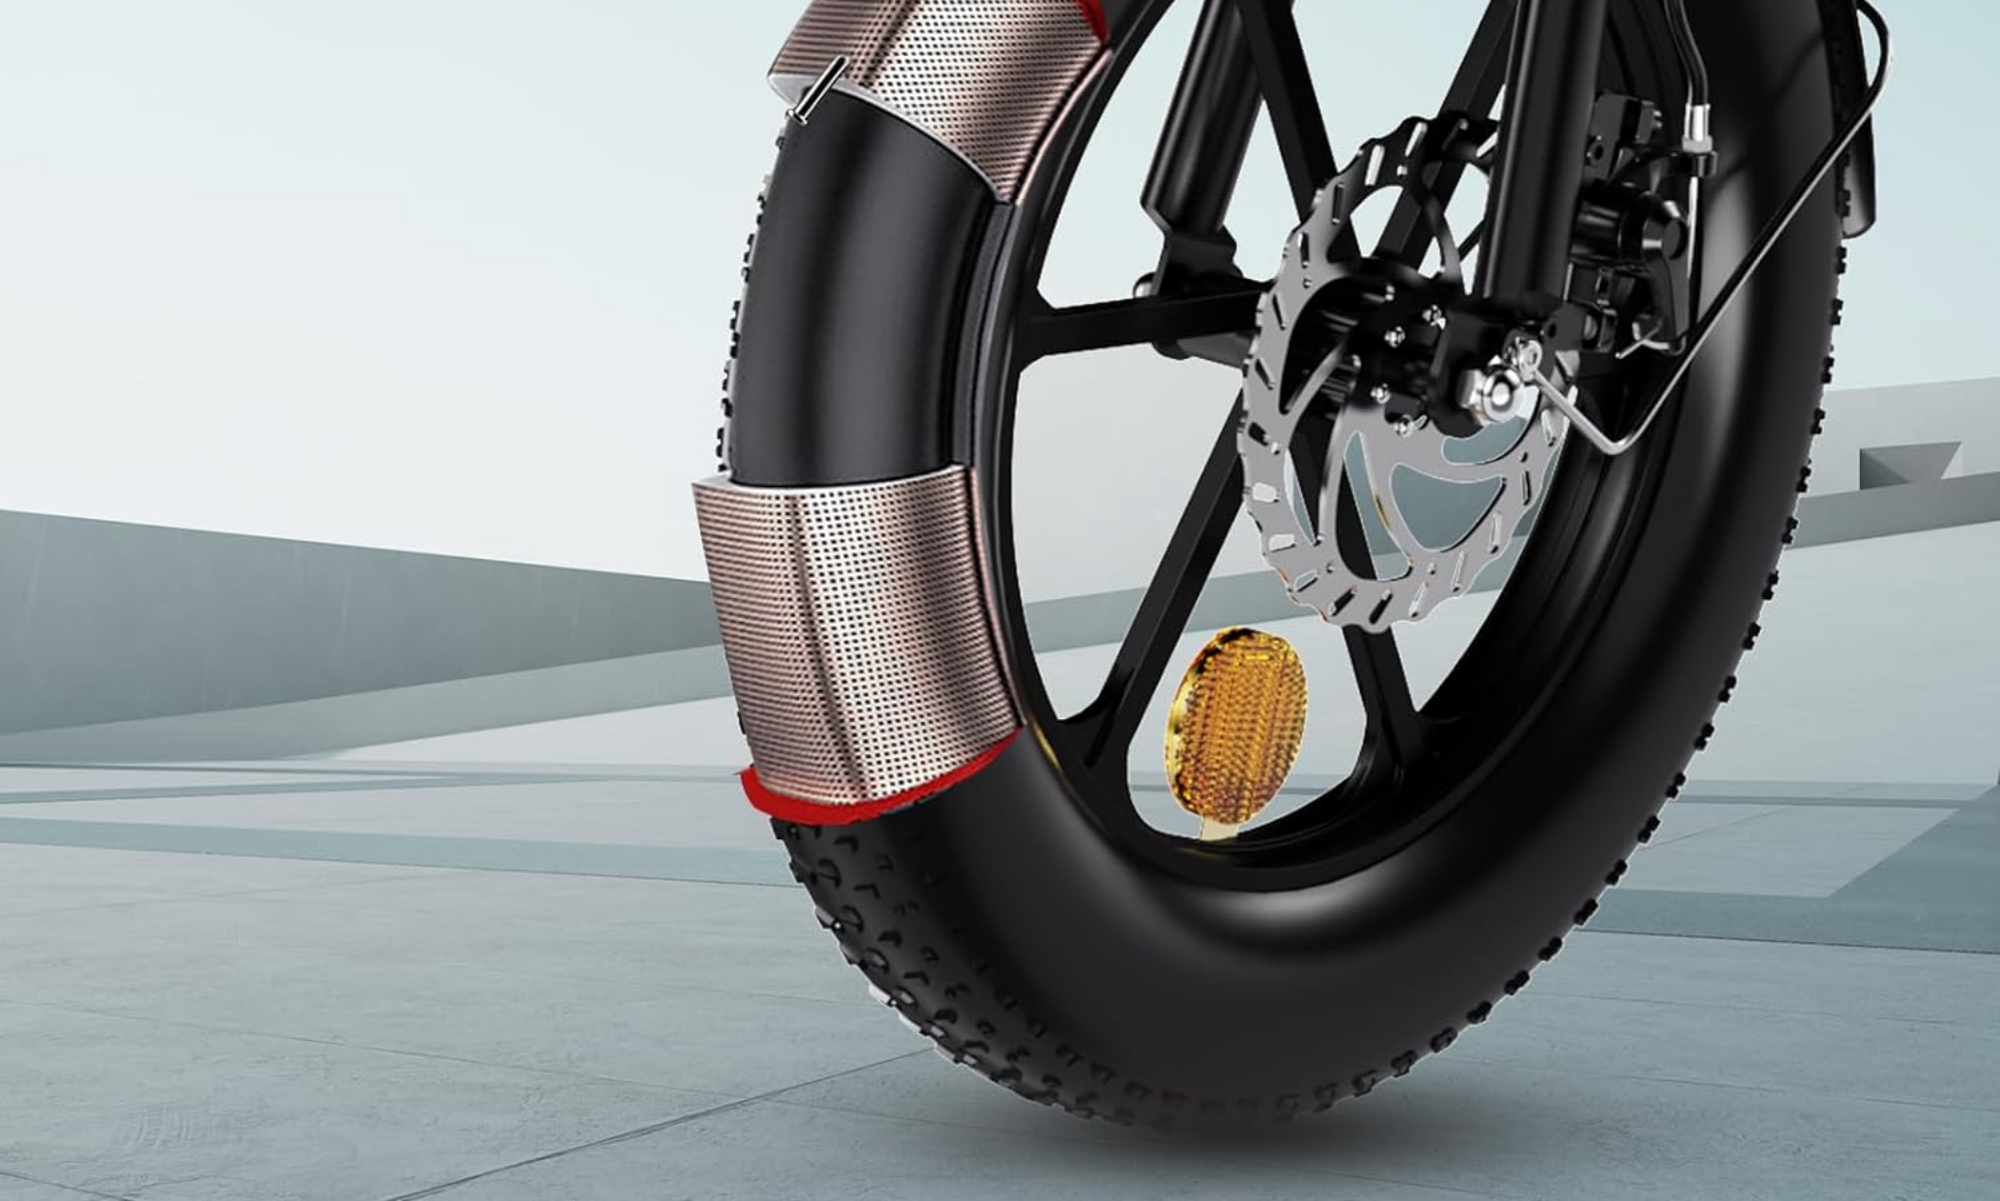 Con estas ruedas no habrá terreno ni condición climatológica adversa que se le resista a esta bicicleta.